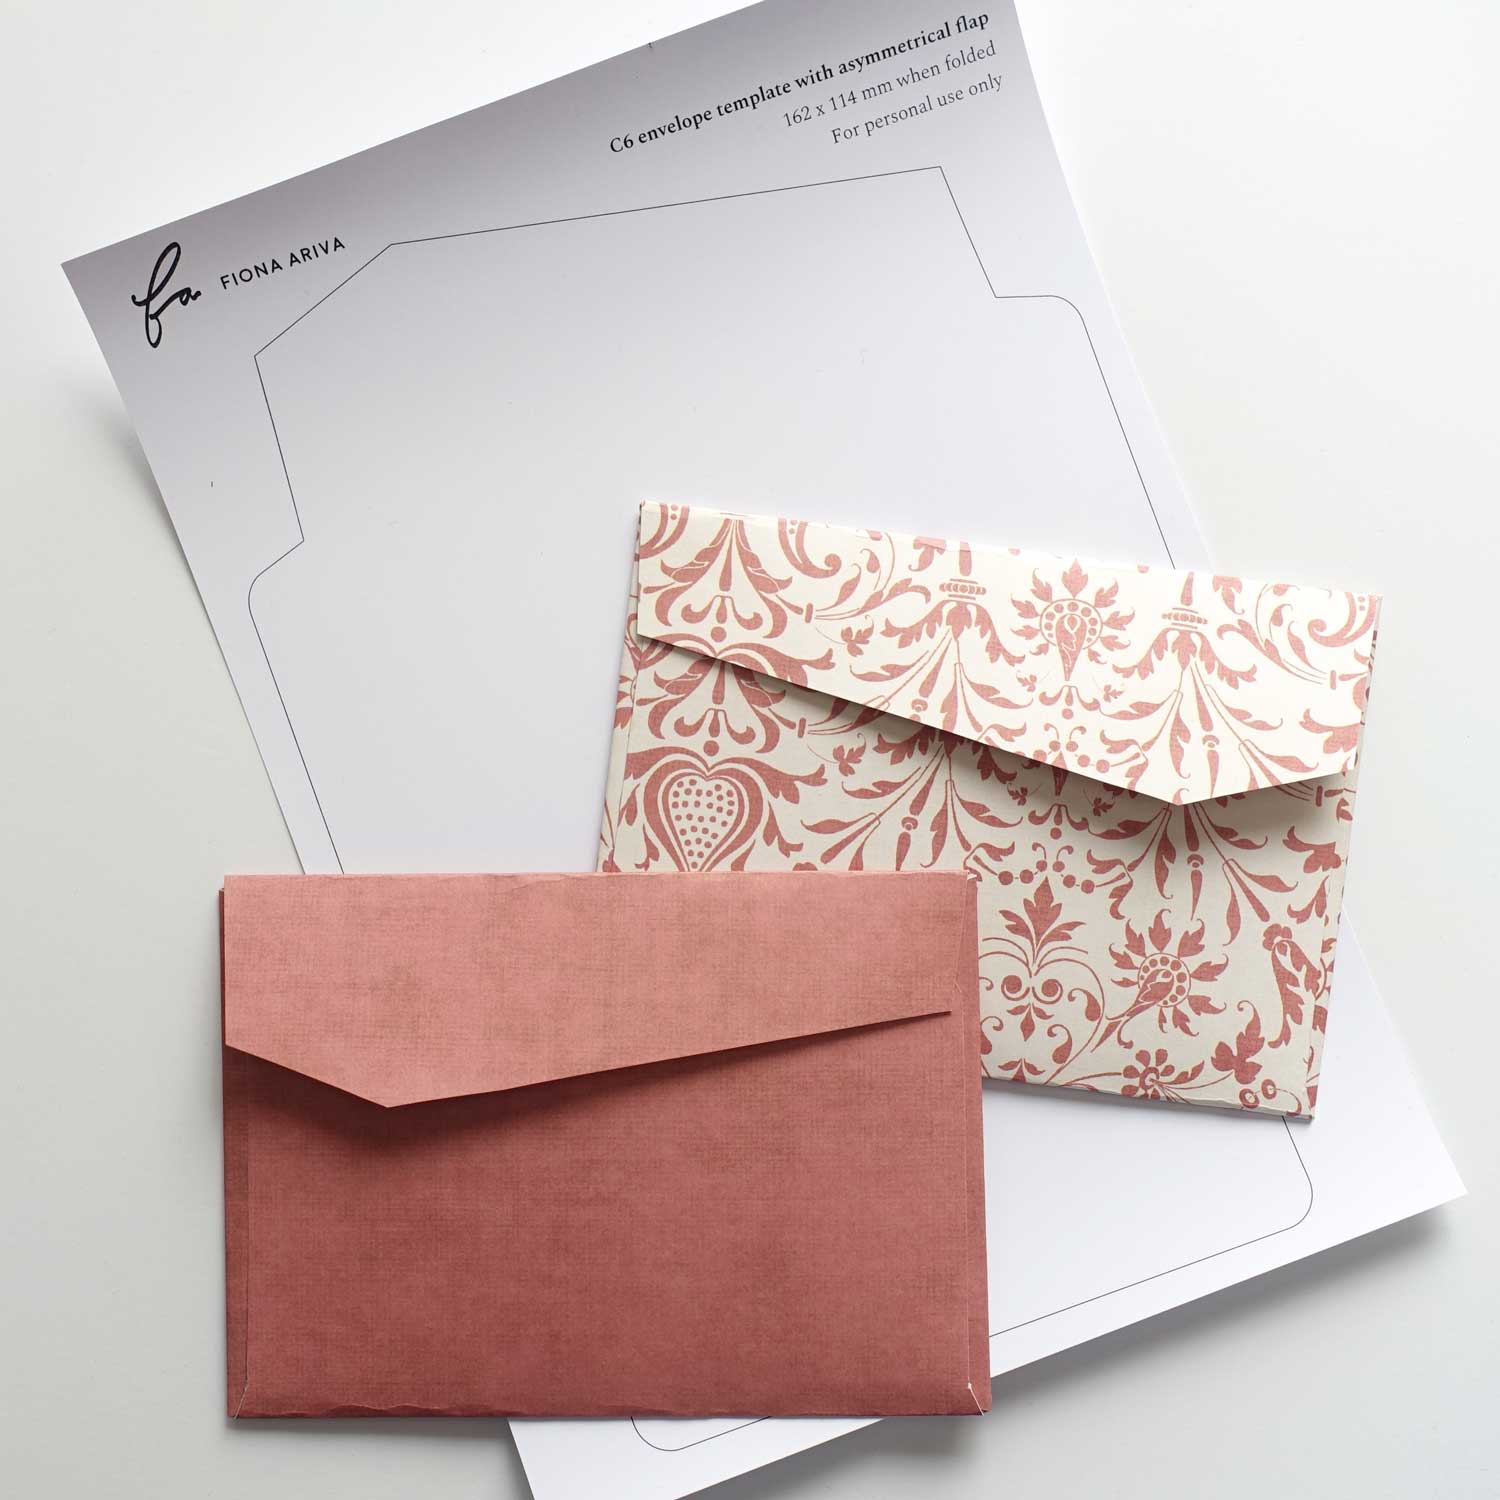 Free creative fun envelope template download print with asymmetric flap